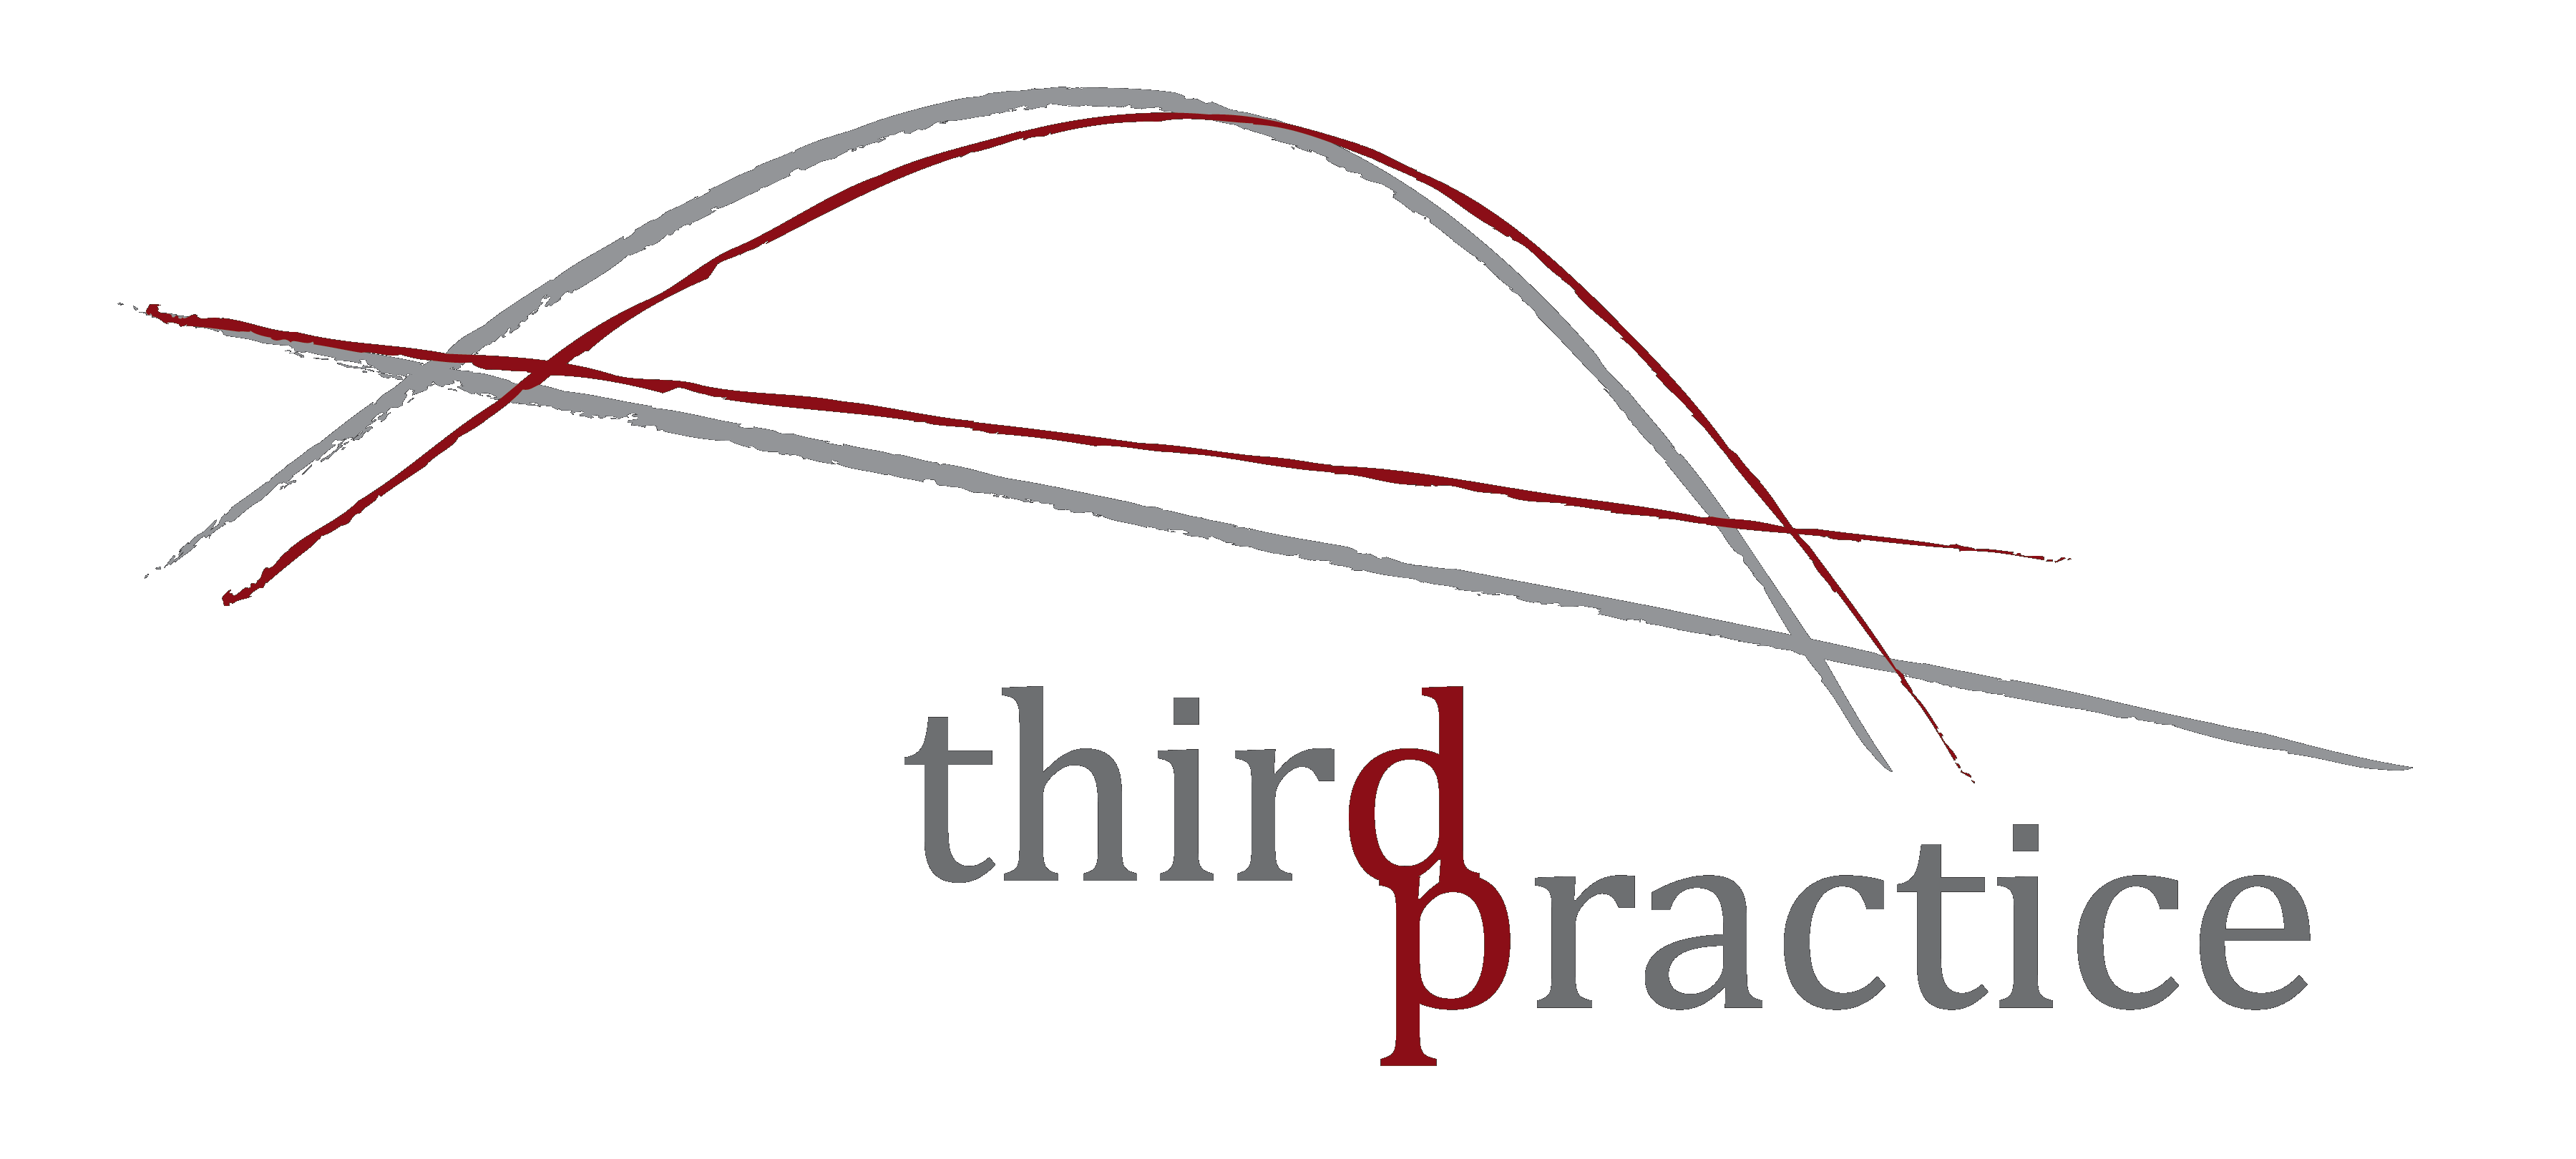 www.thirdpractice.com